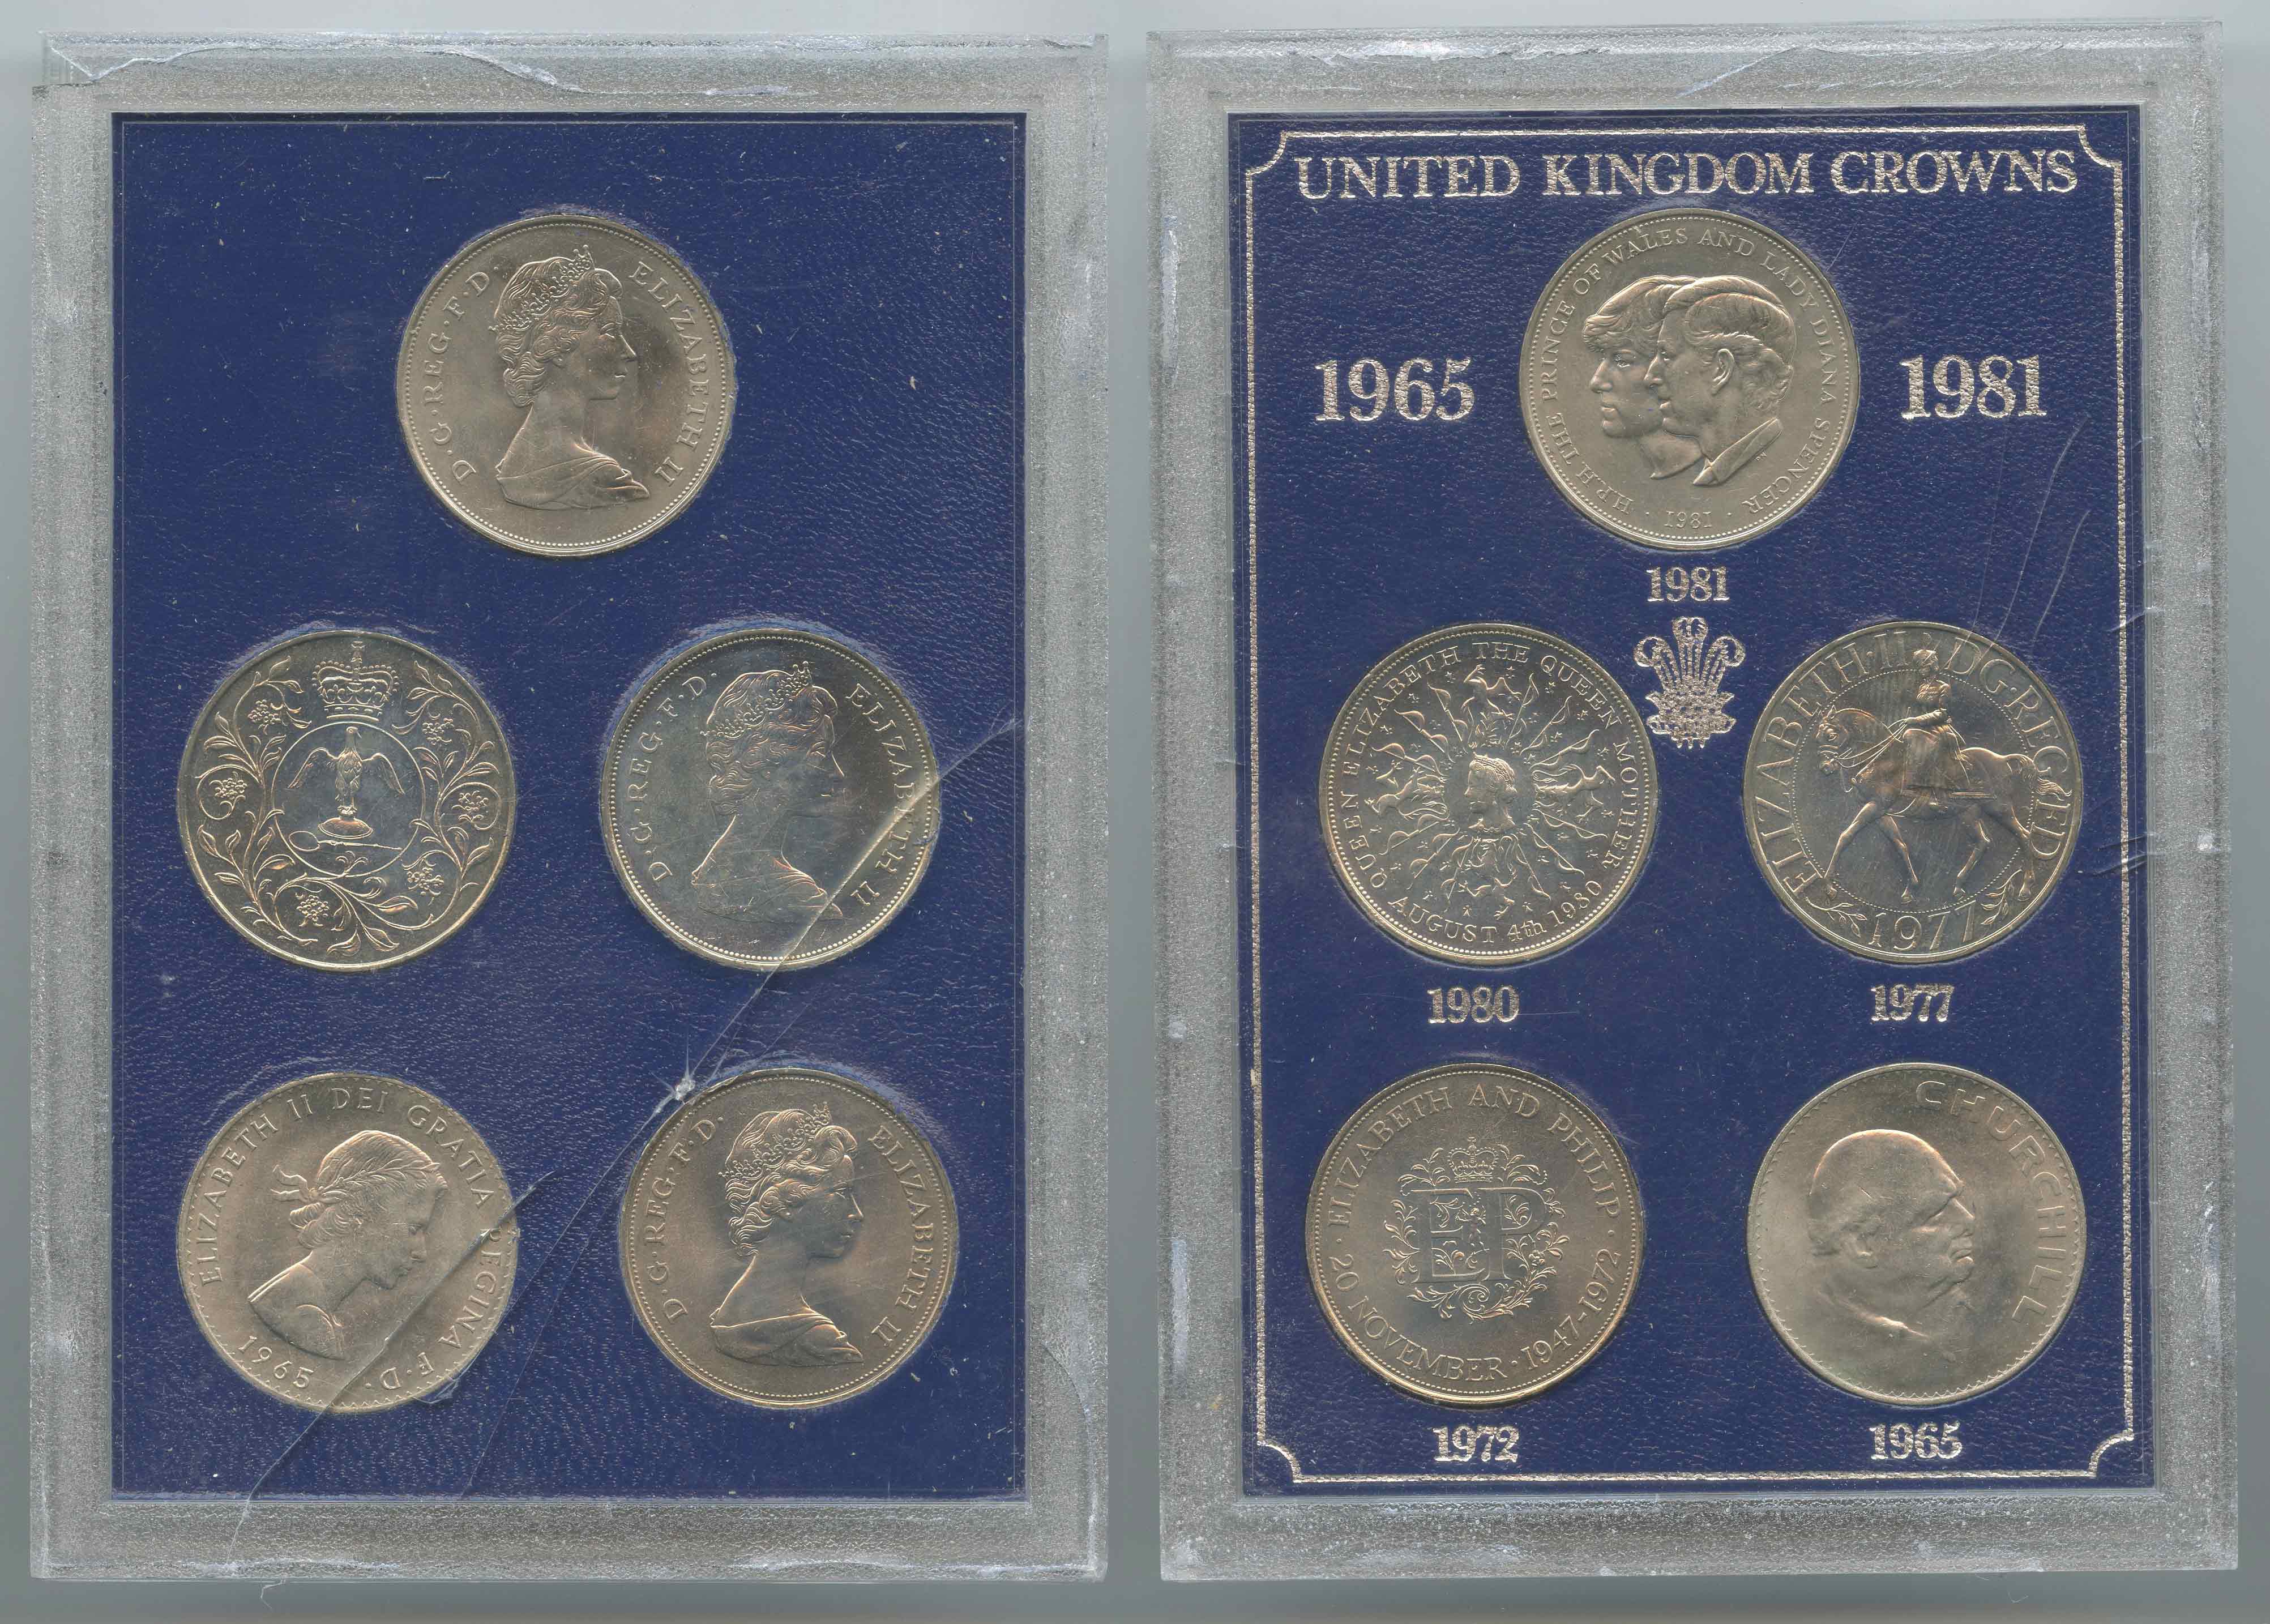 REGNO UNITO, Elizabeth II (1952-2022) Set "United Kingdom crowns 1965-1981"